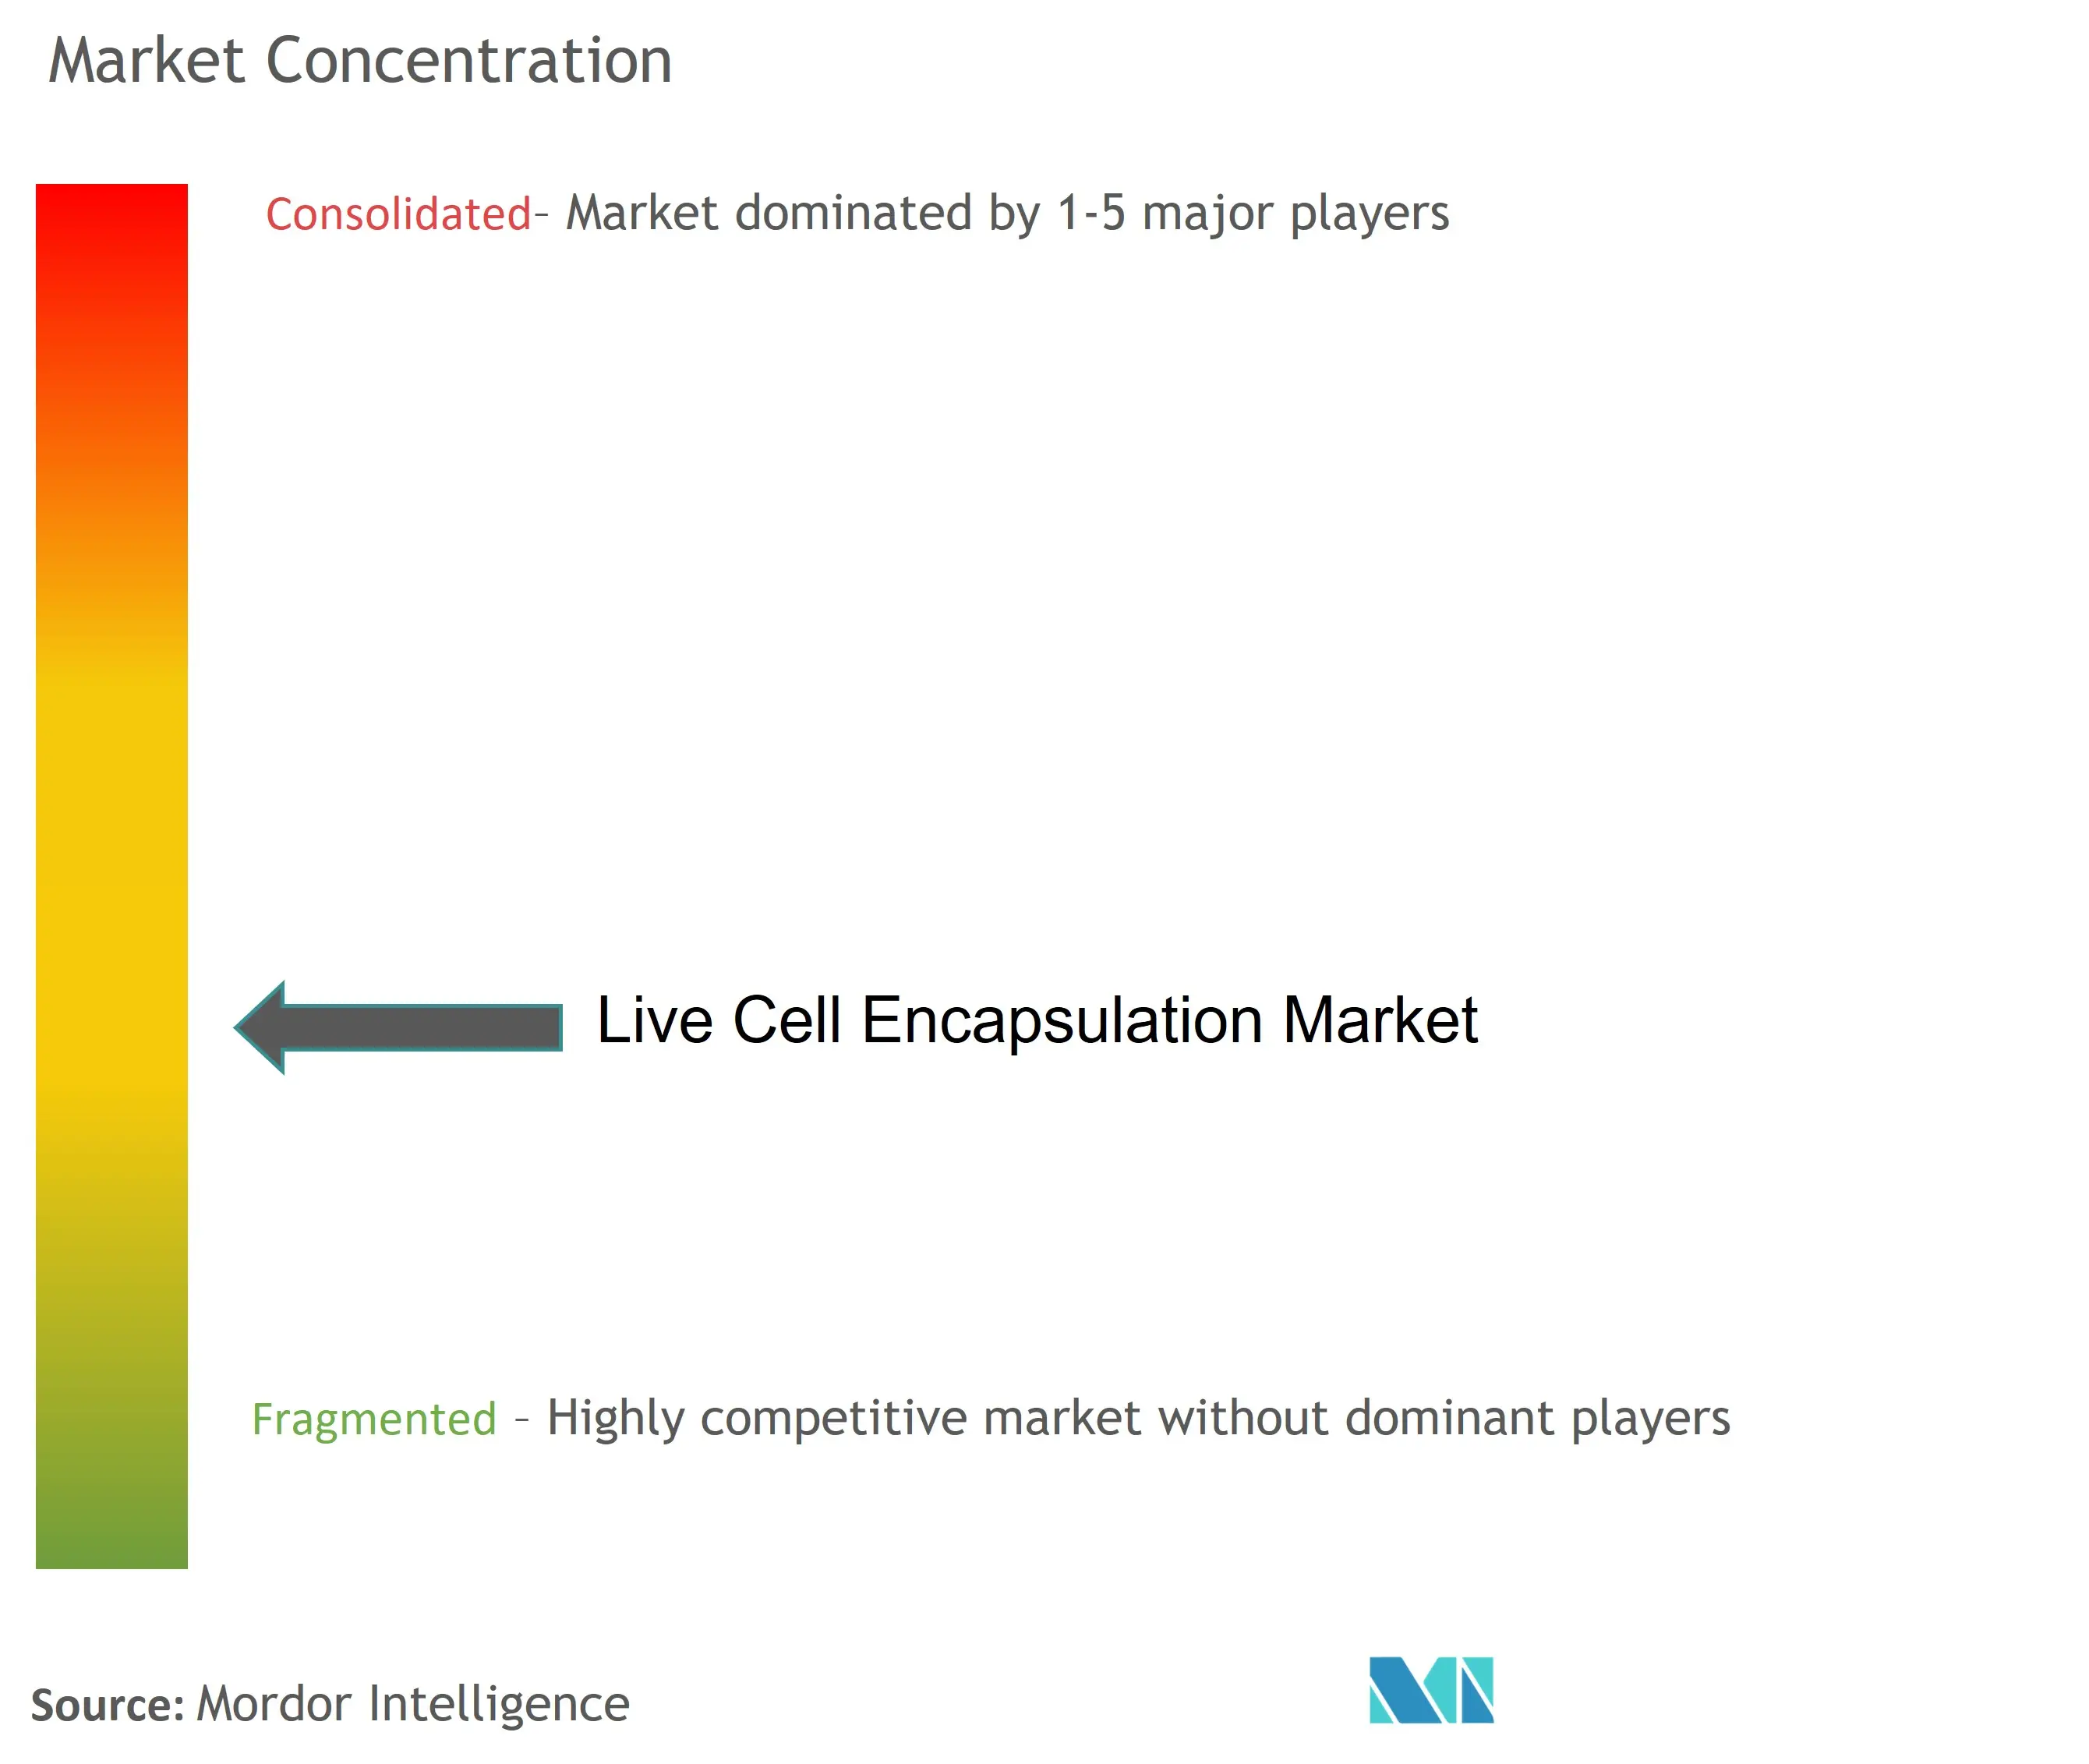 Live Cell Encapsulation Market Concentration